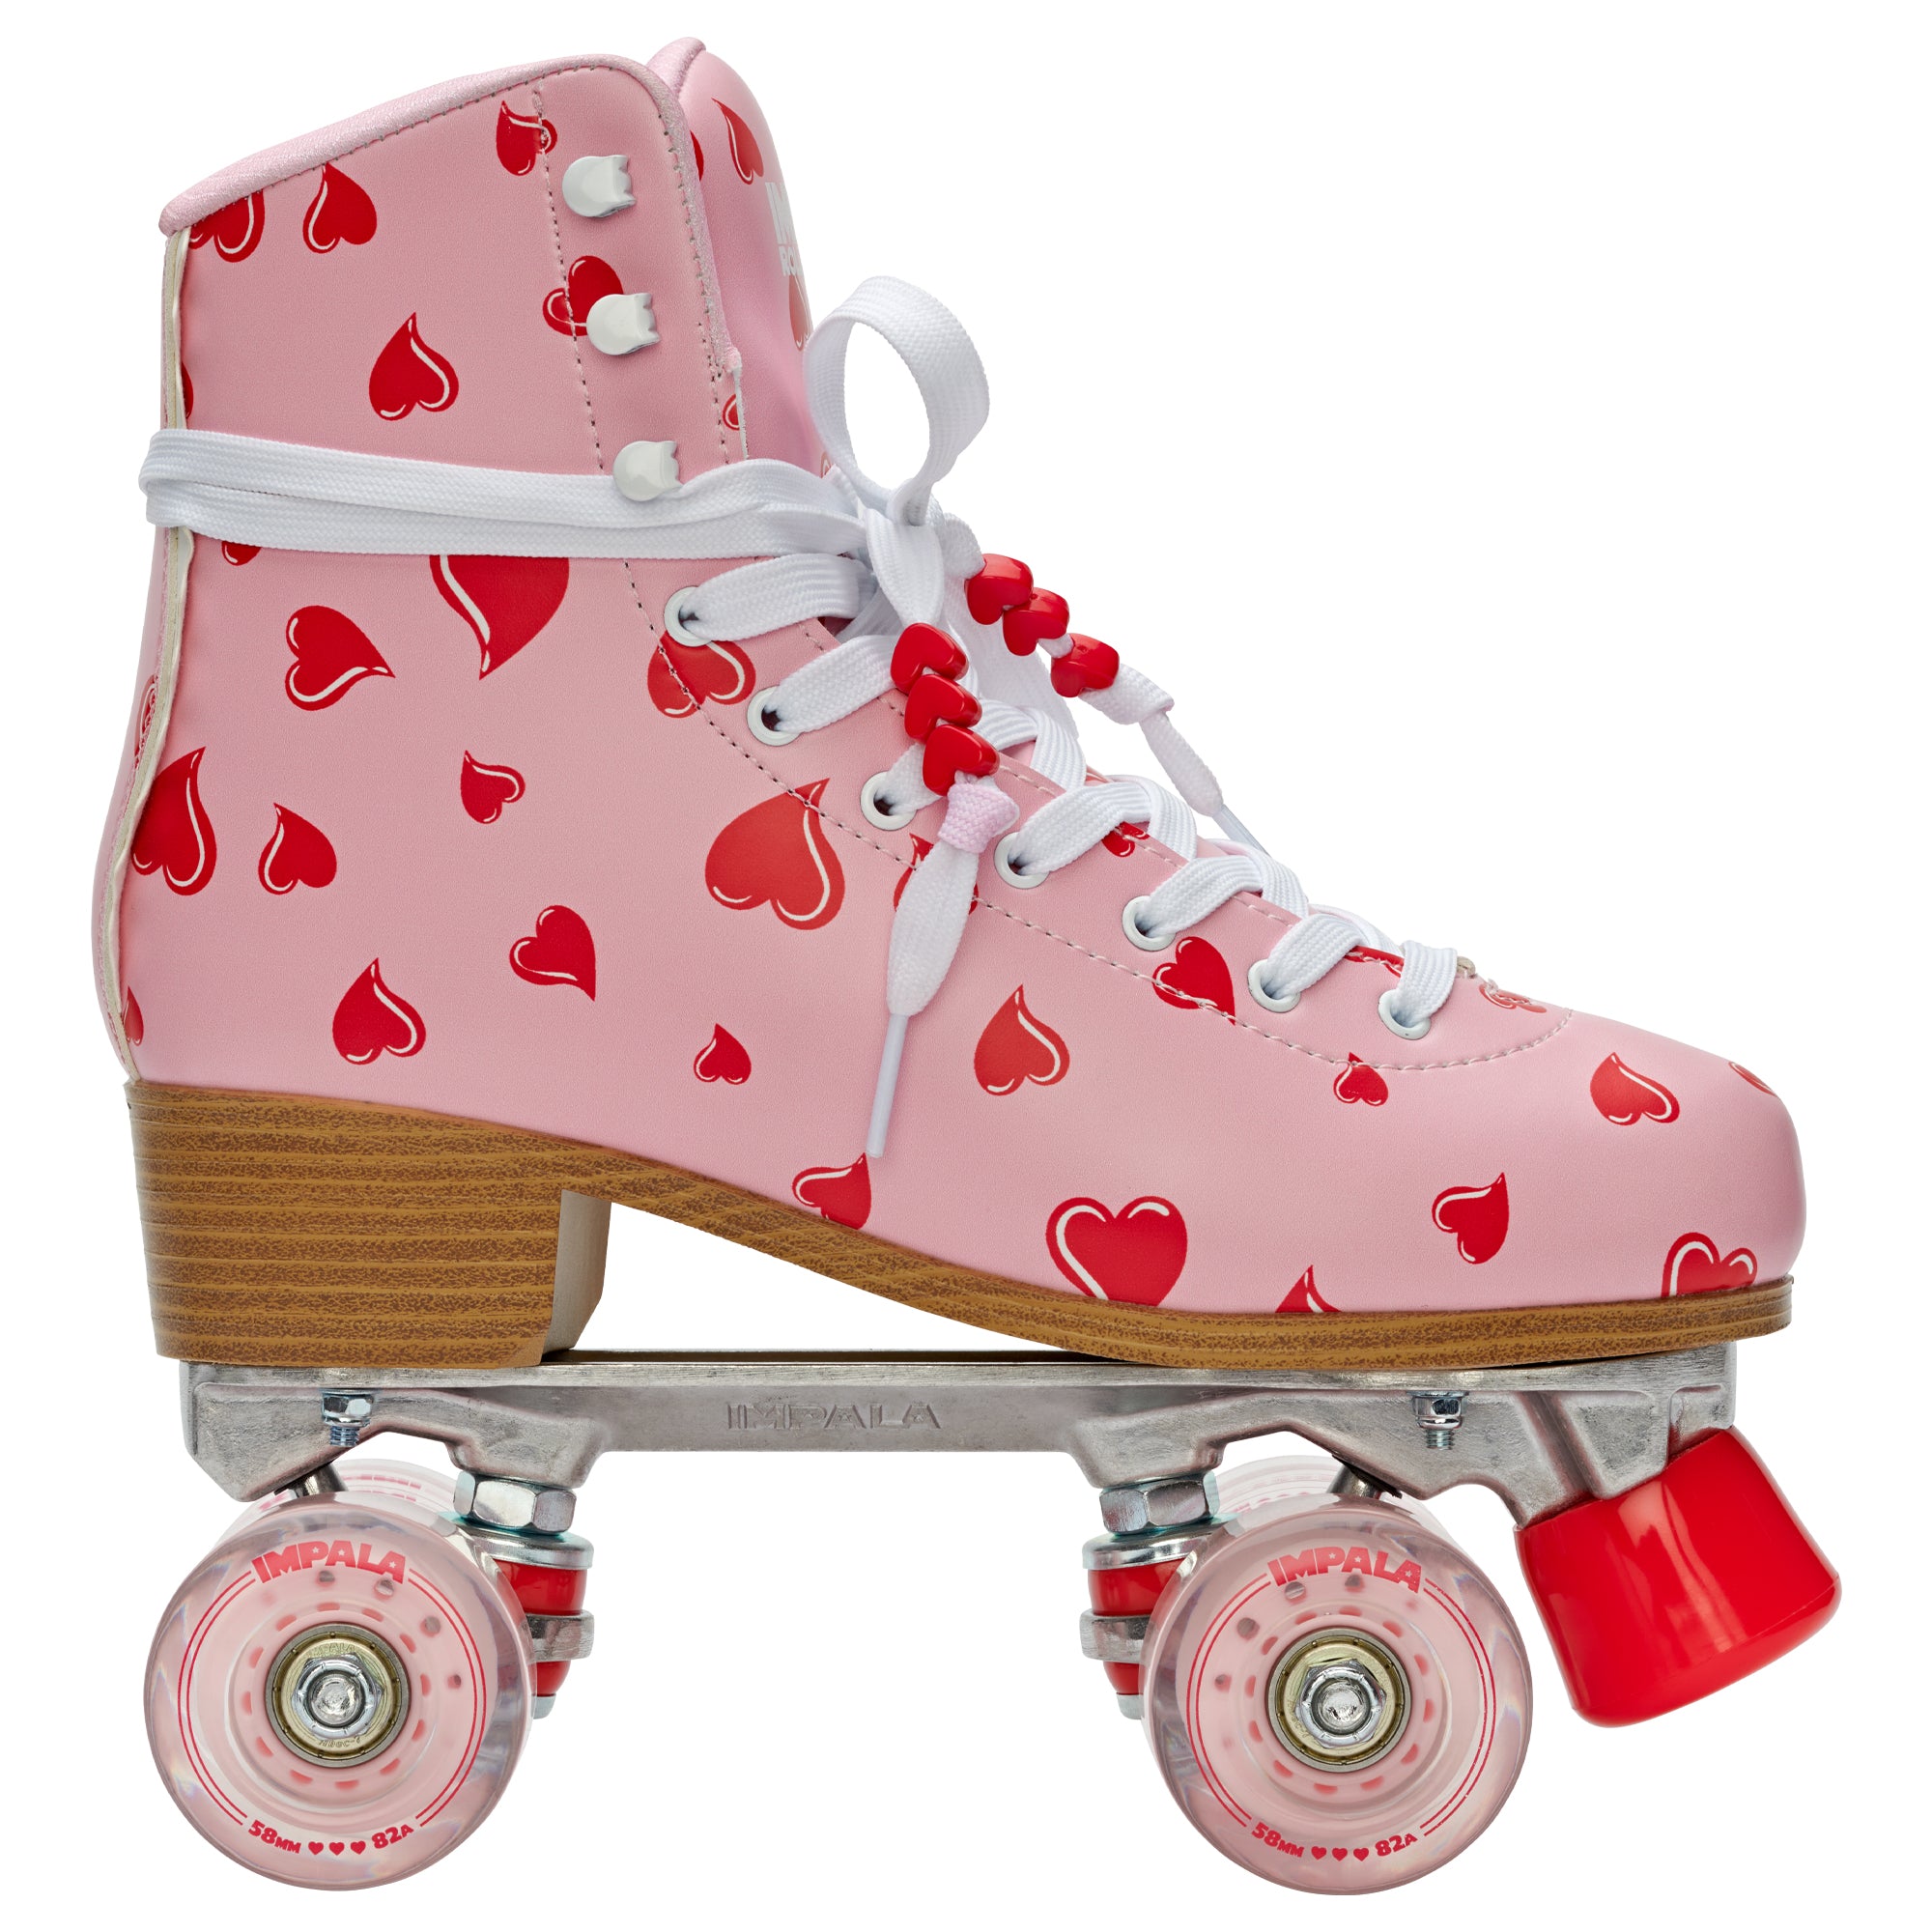 Impala Roller skate Hearts